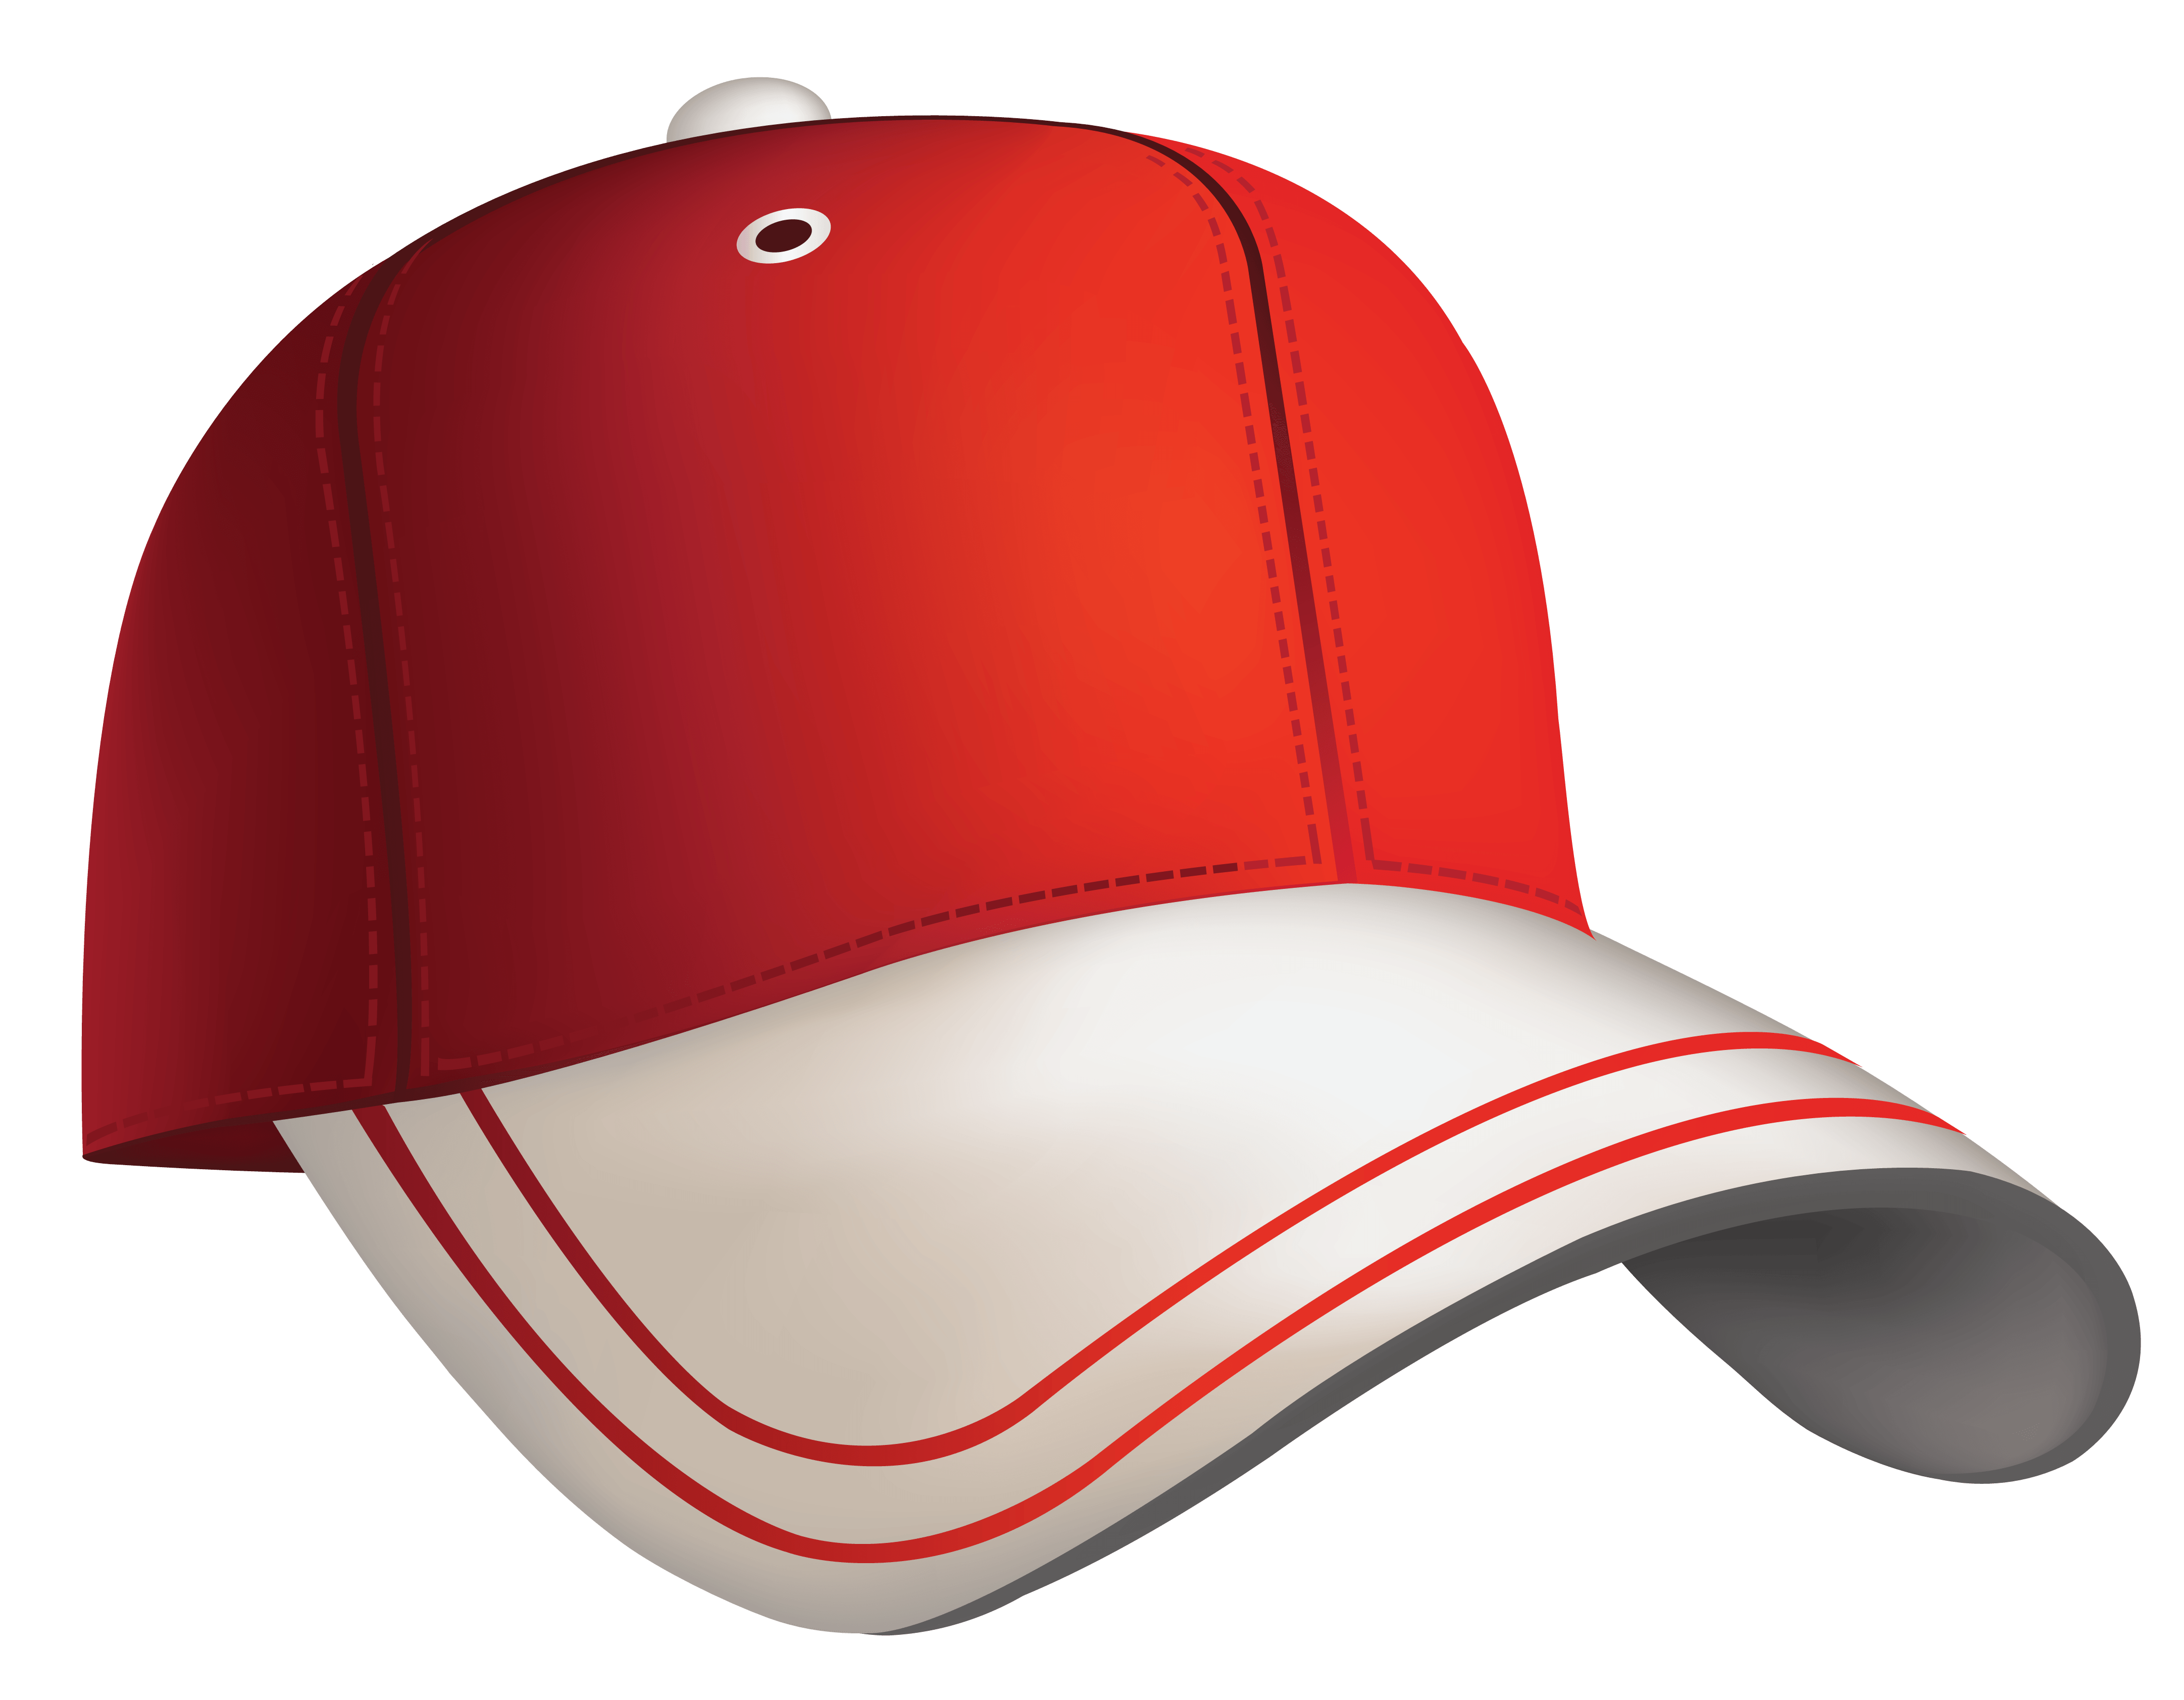 download baseball cap png image png image pngimg #19182